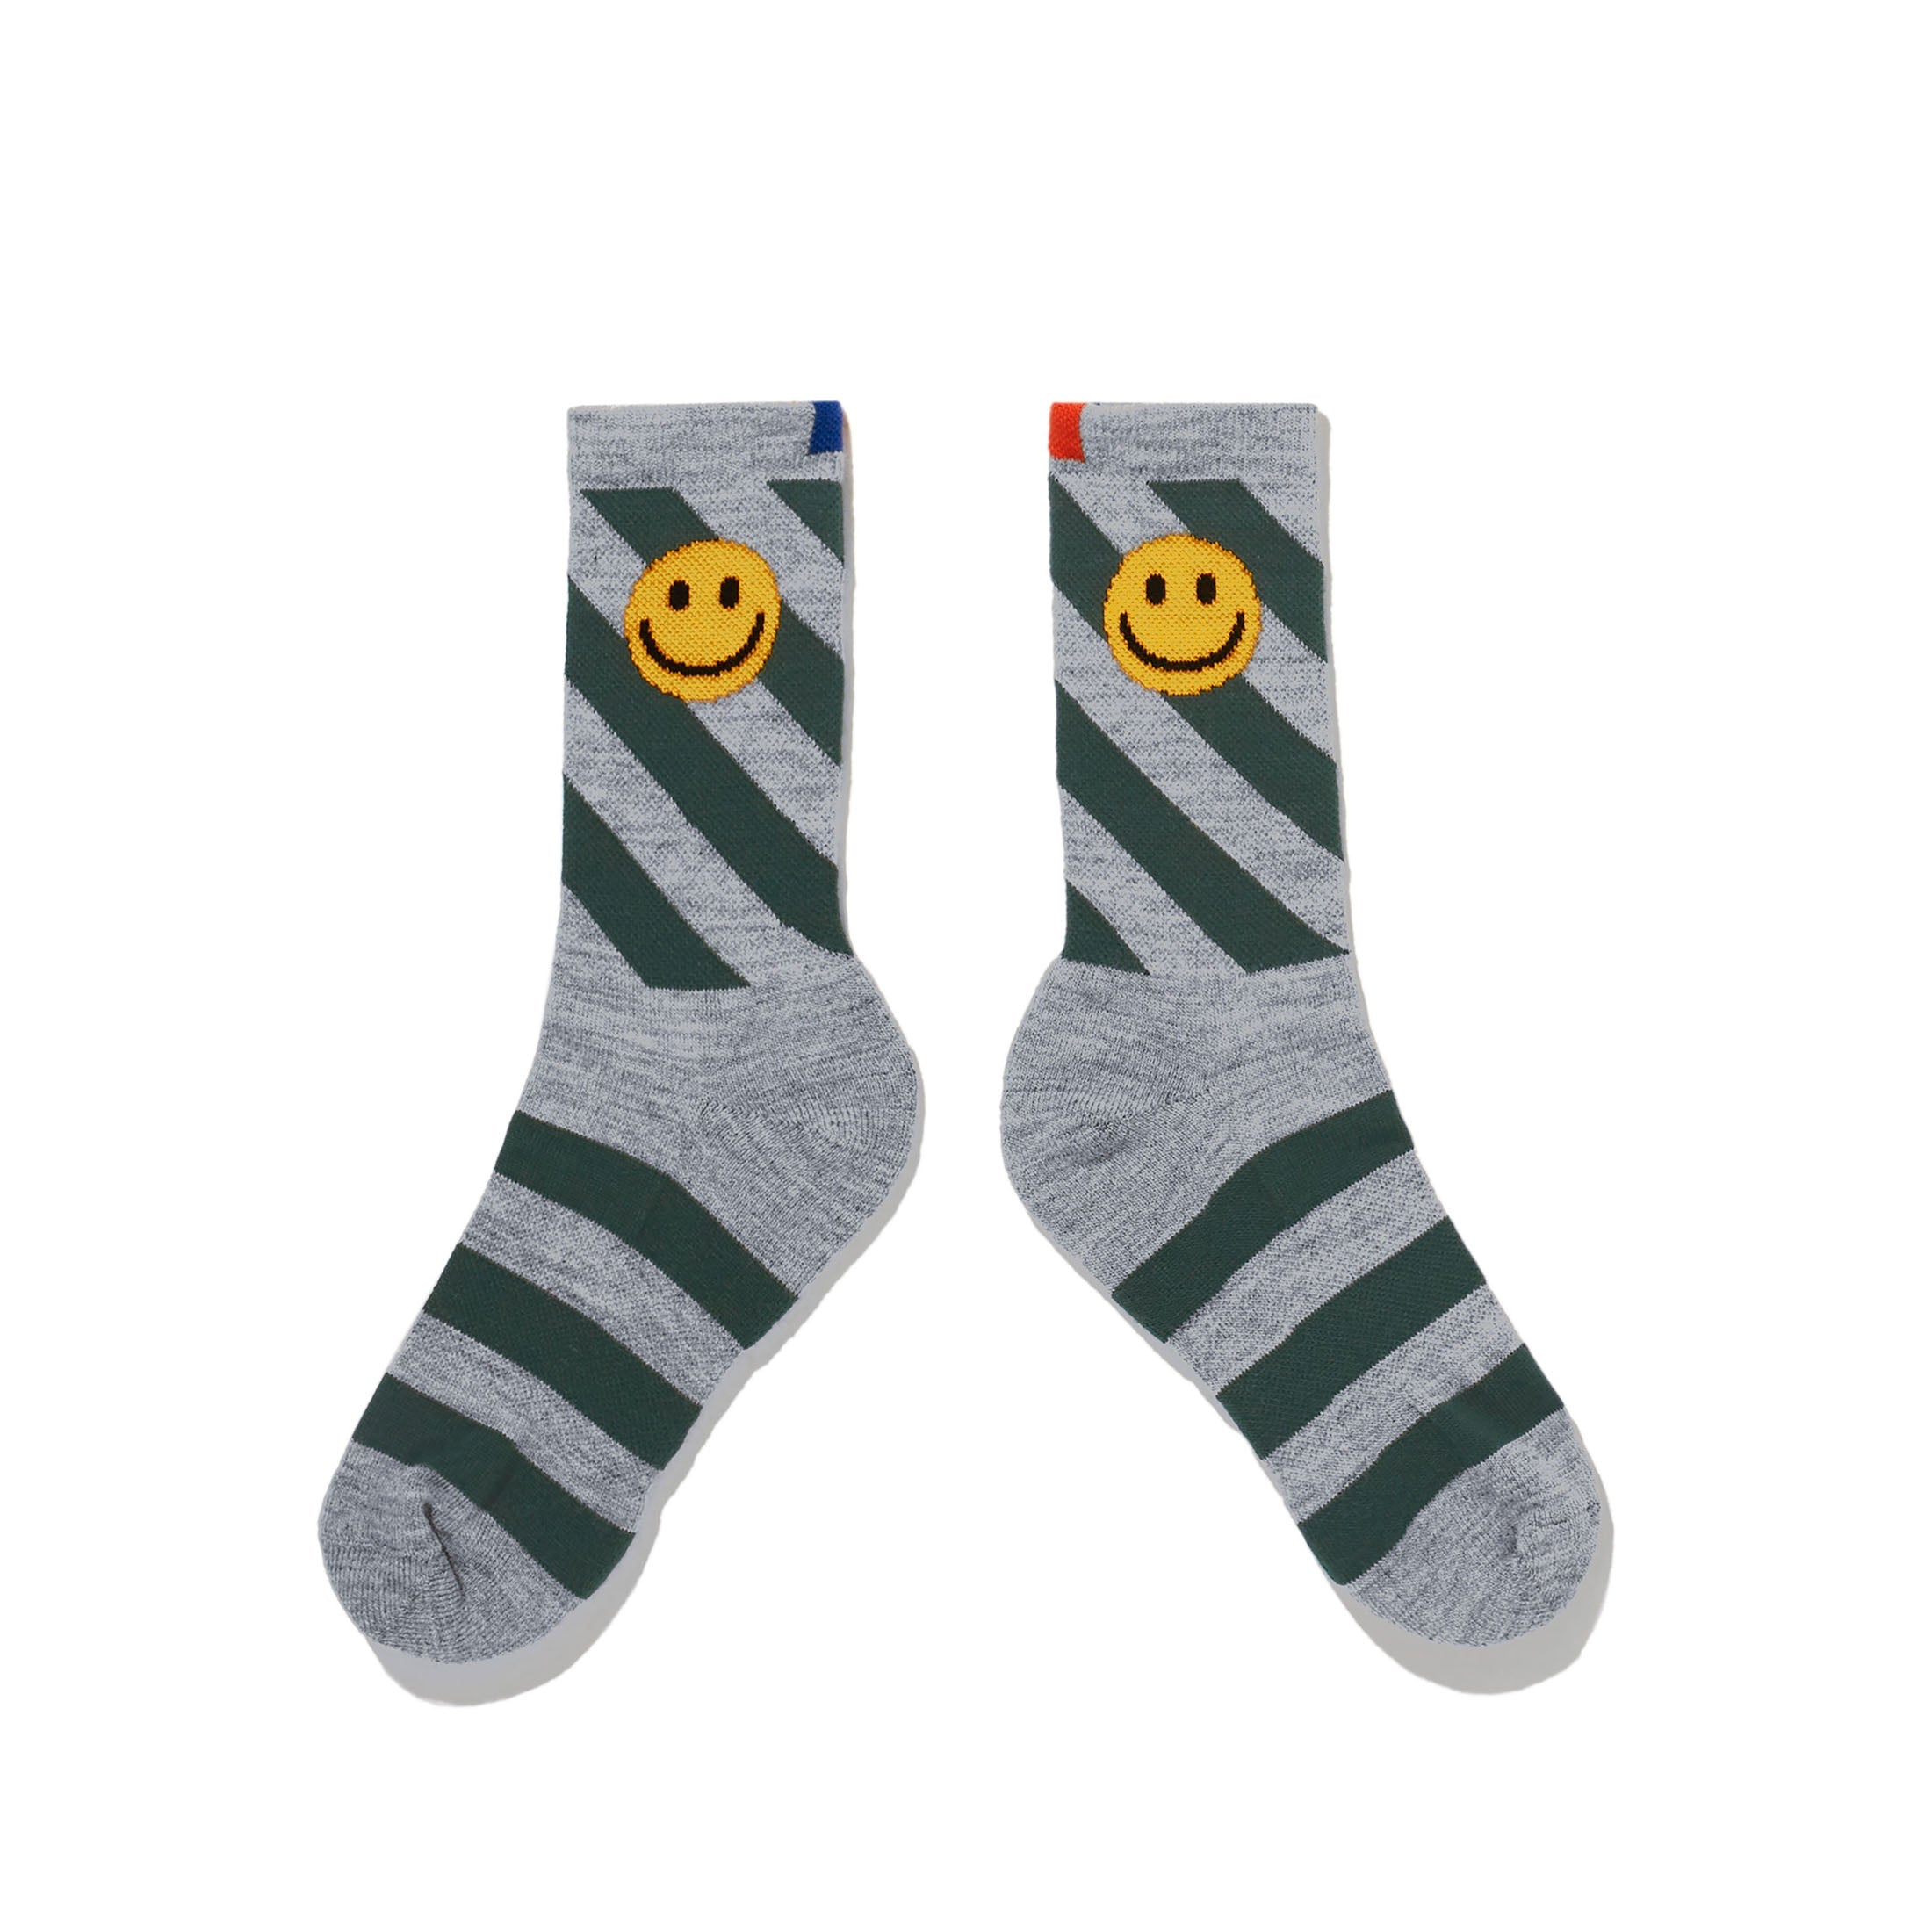 The Women's Diagonal Smile Stripe Sock - Heather Grey/Pine